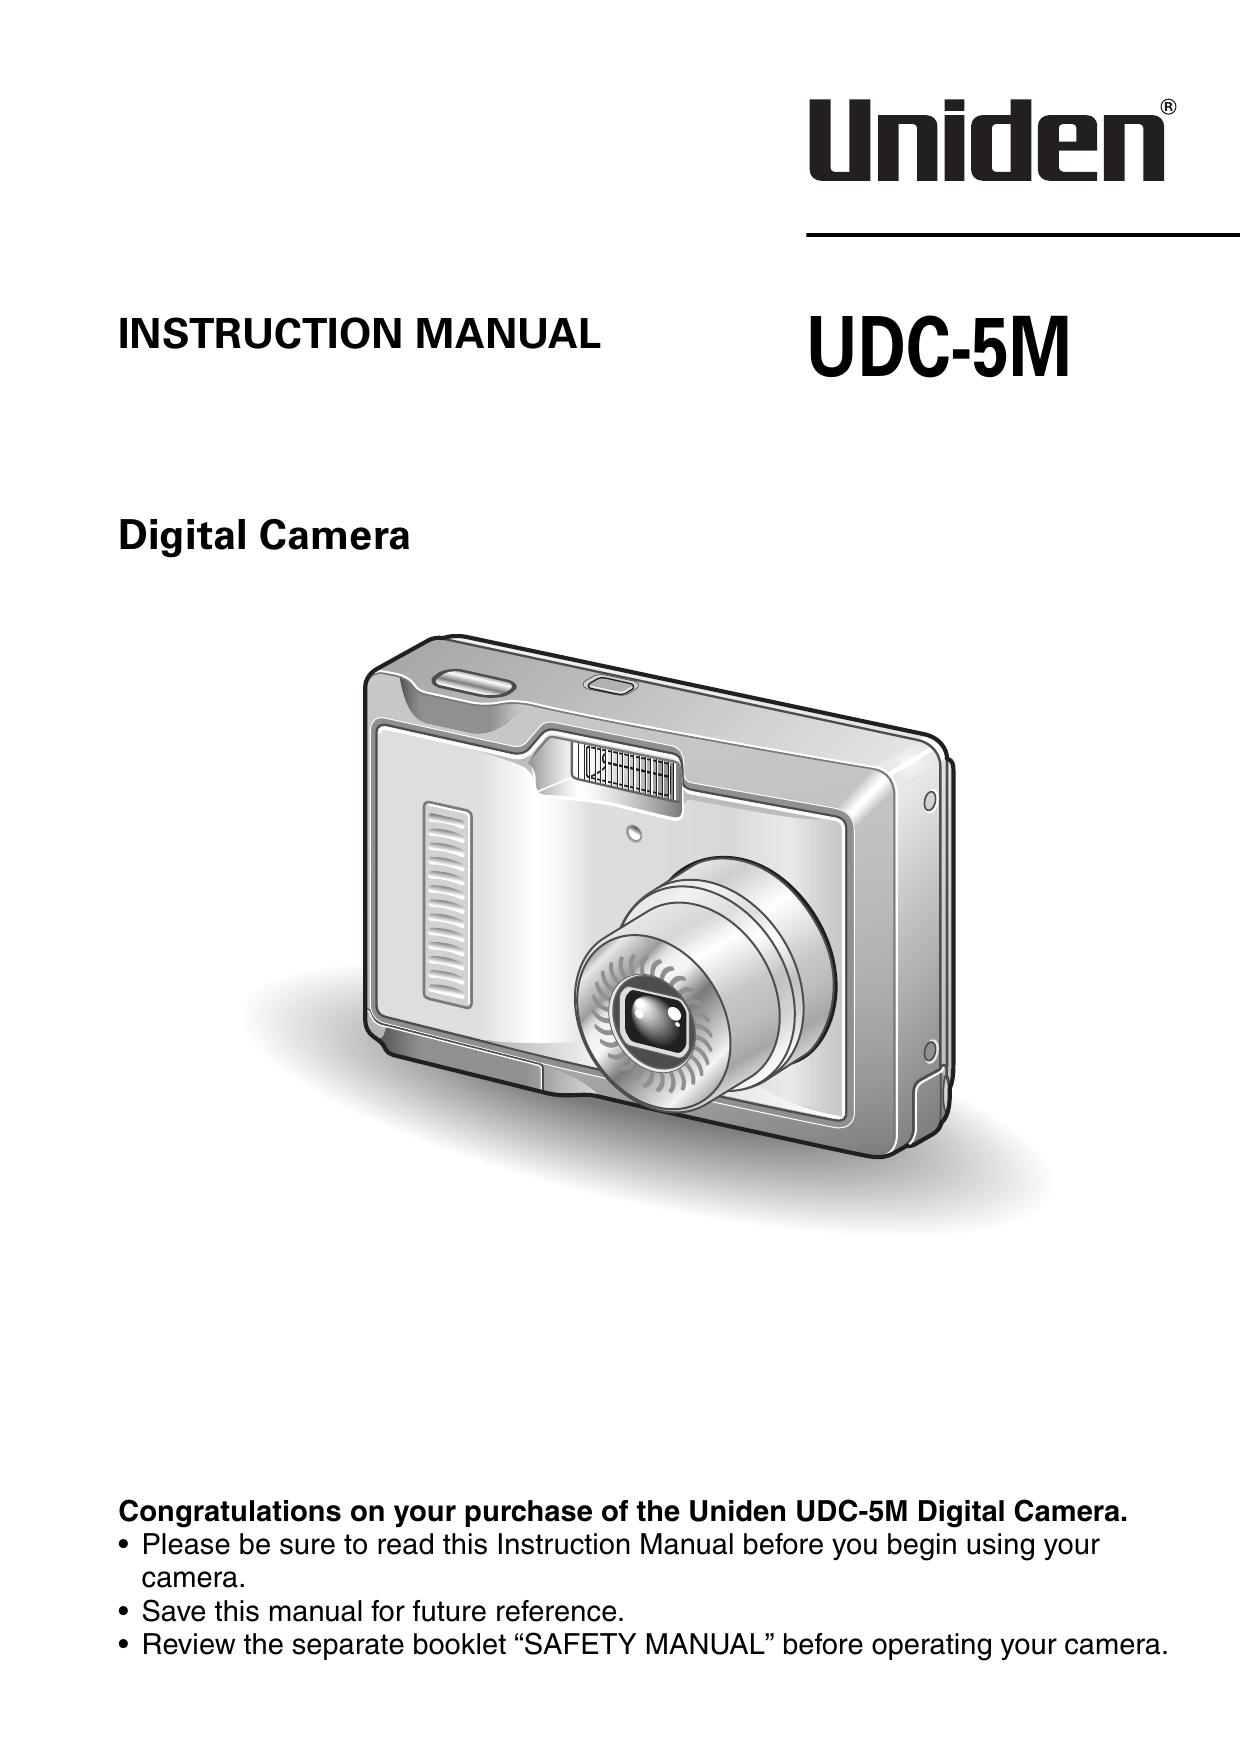 Uniden UDC-5M Digital Camera User Manual